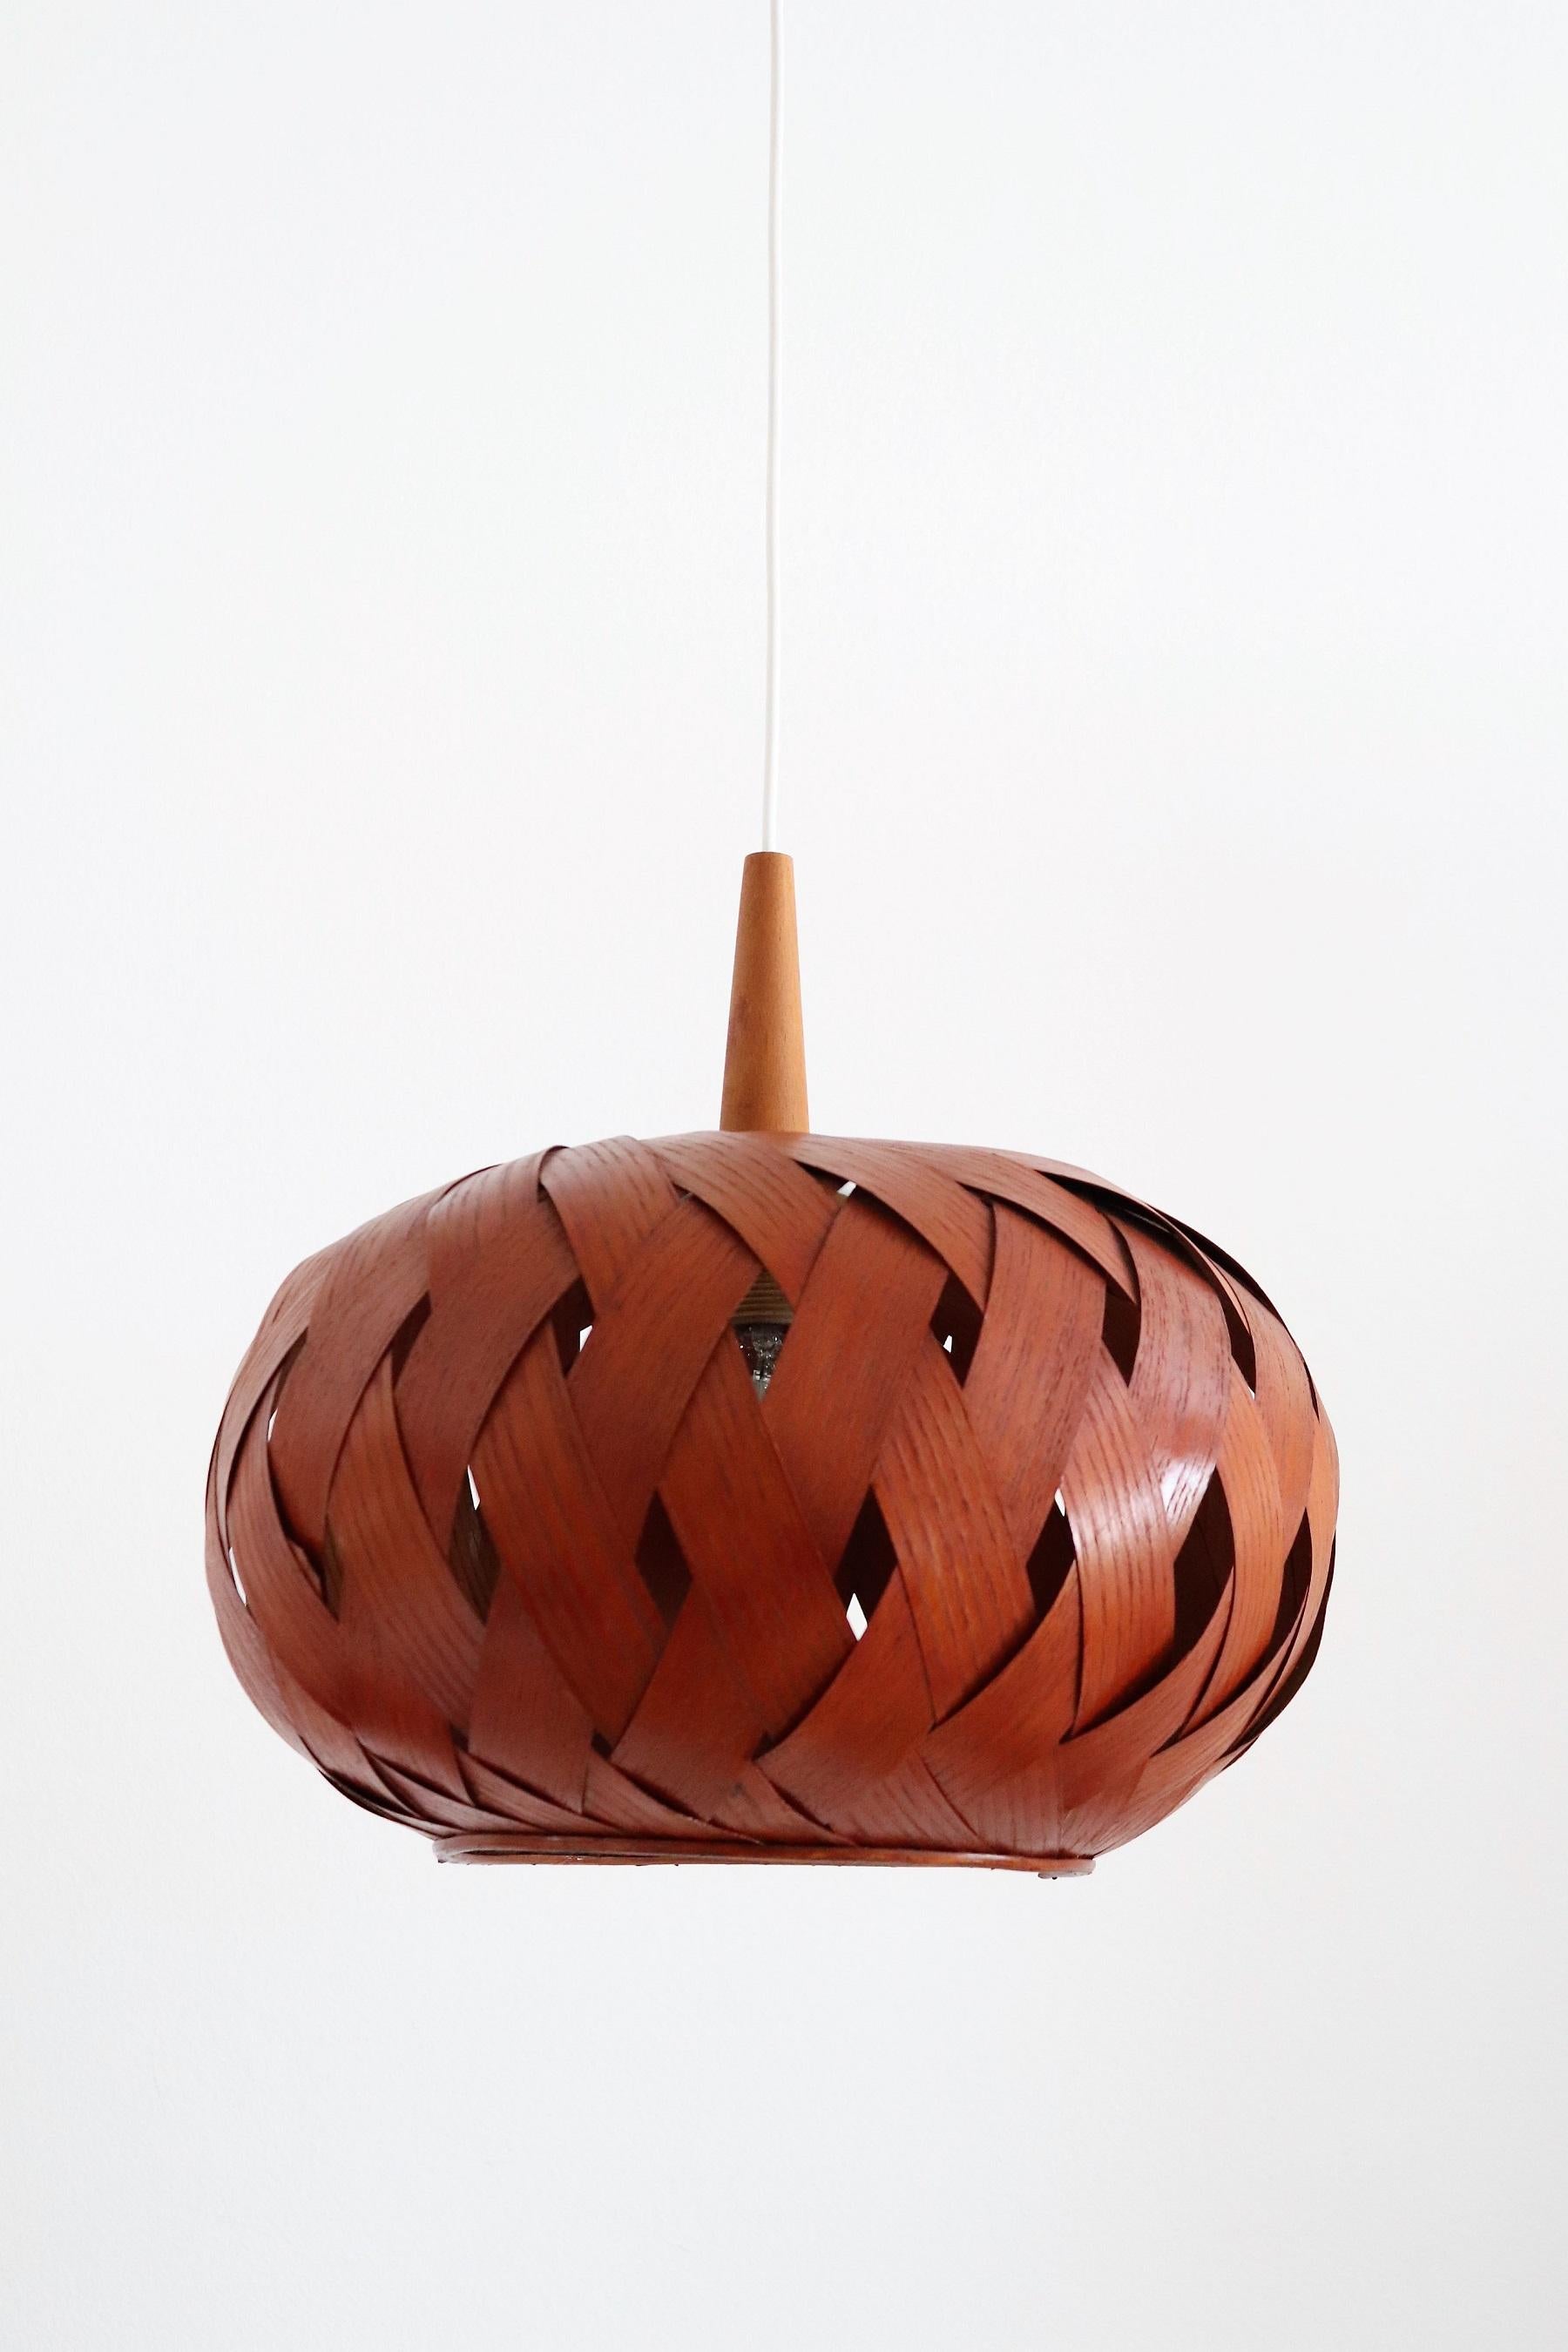 Swedish Organic Modernist Natural Teak Wood Veneer and Wicker Pendant Lamp, 1960s For Sale